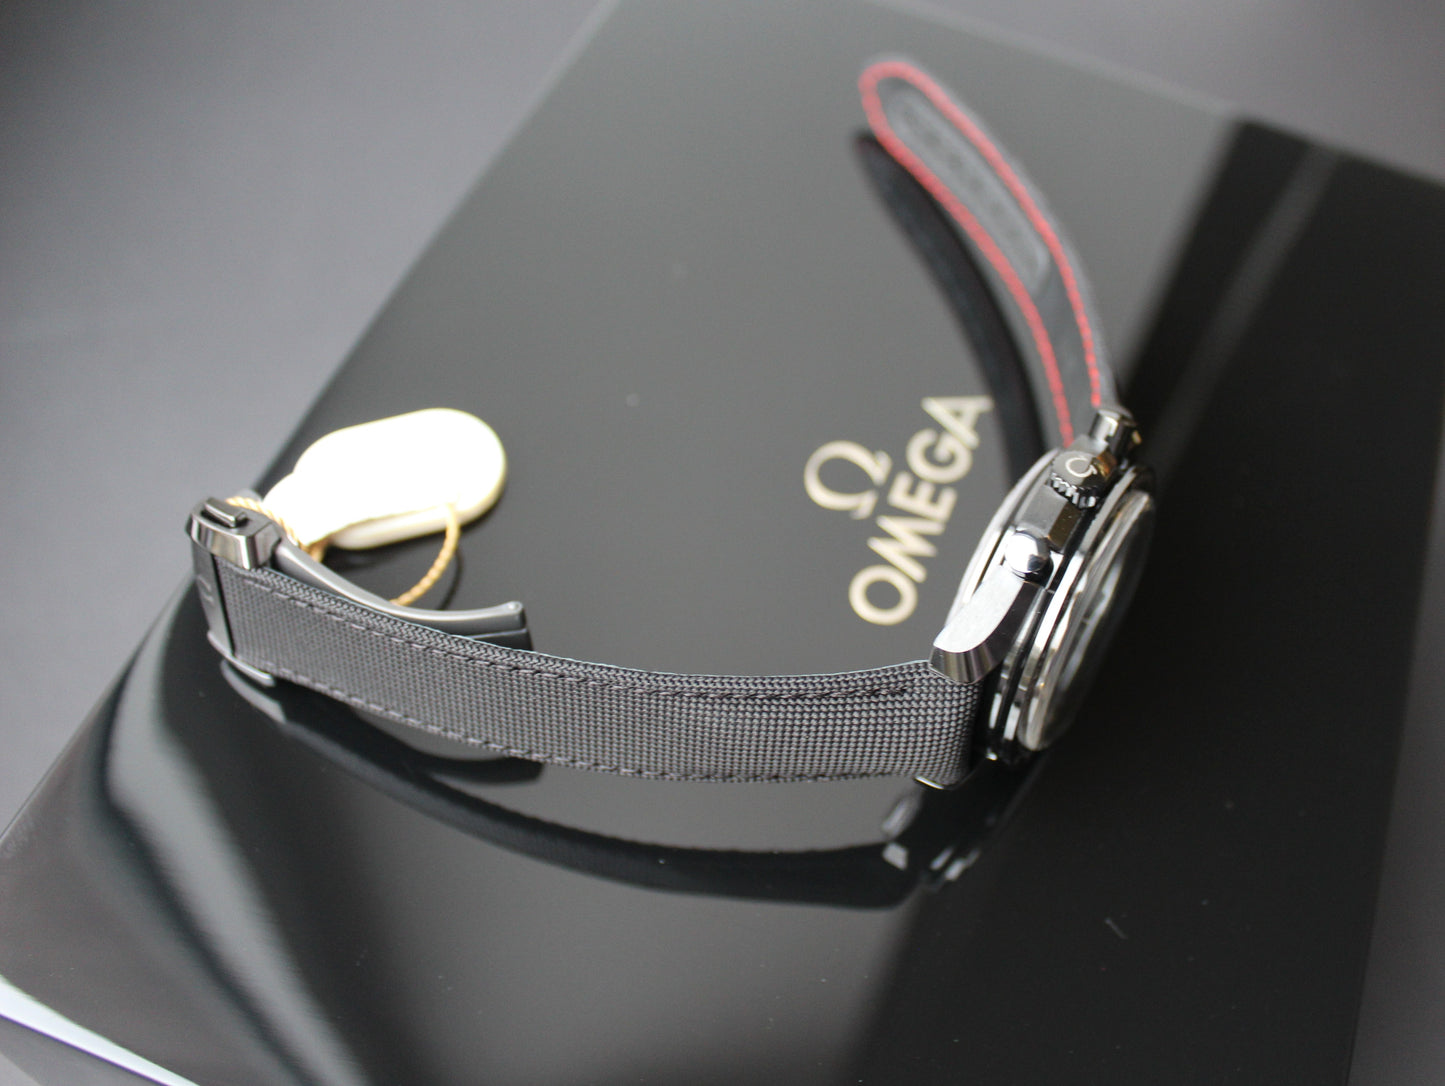 Omega Speedmaster Moonwatch Dark Side of the Moon Ceramic Black 311.92.44.51.01.007 céramique noire 44 mm, bracelet textile noir